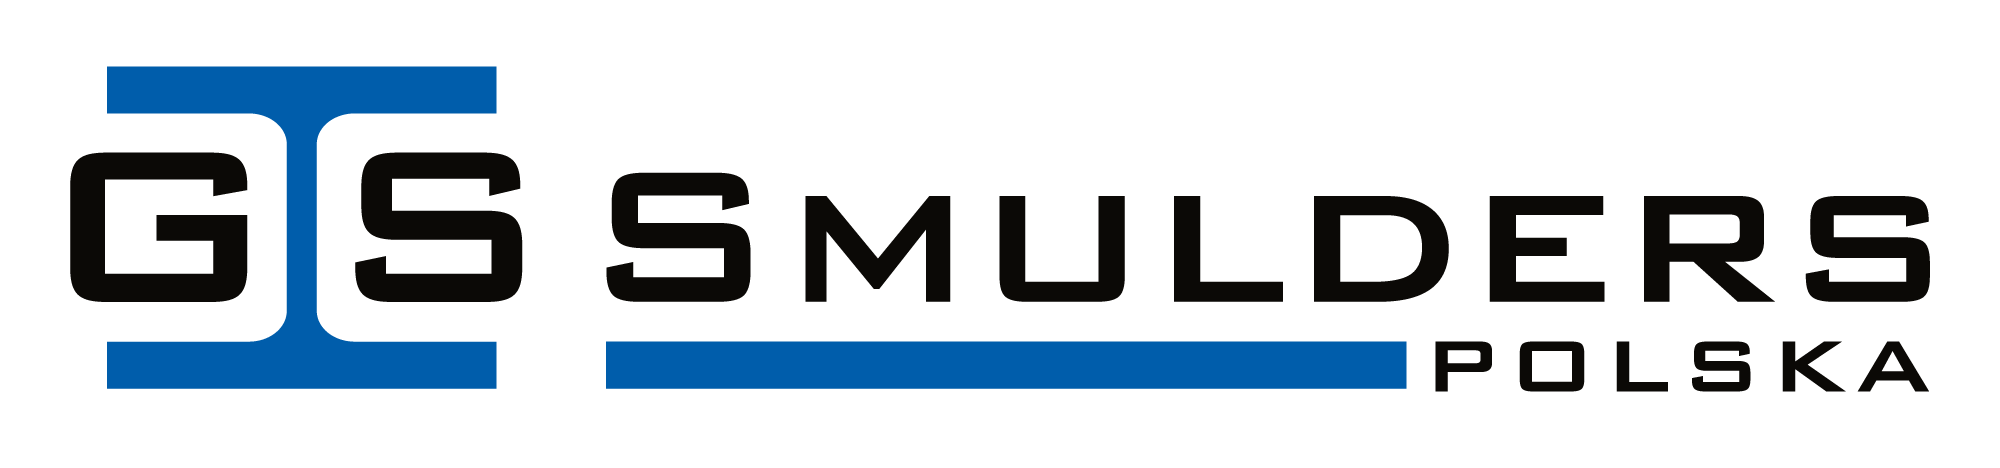 Logo-Smulders-Polska-2000x468